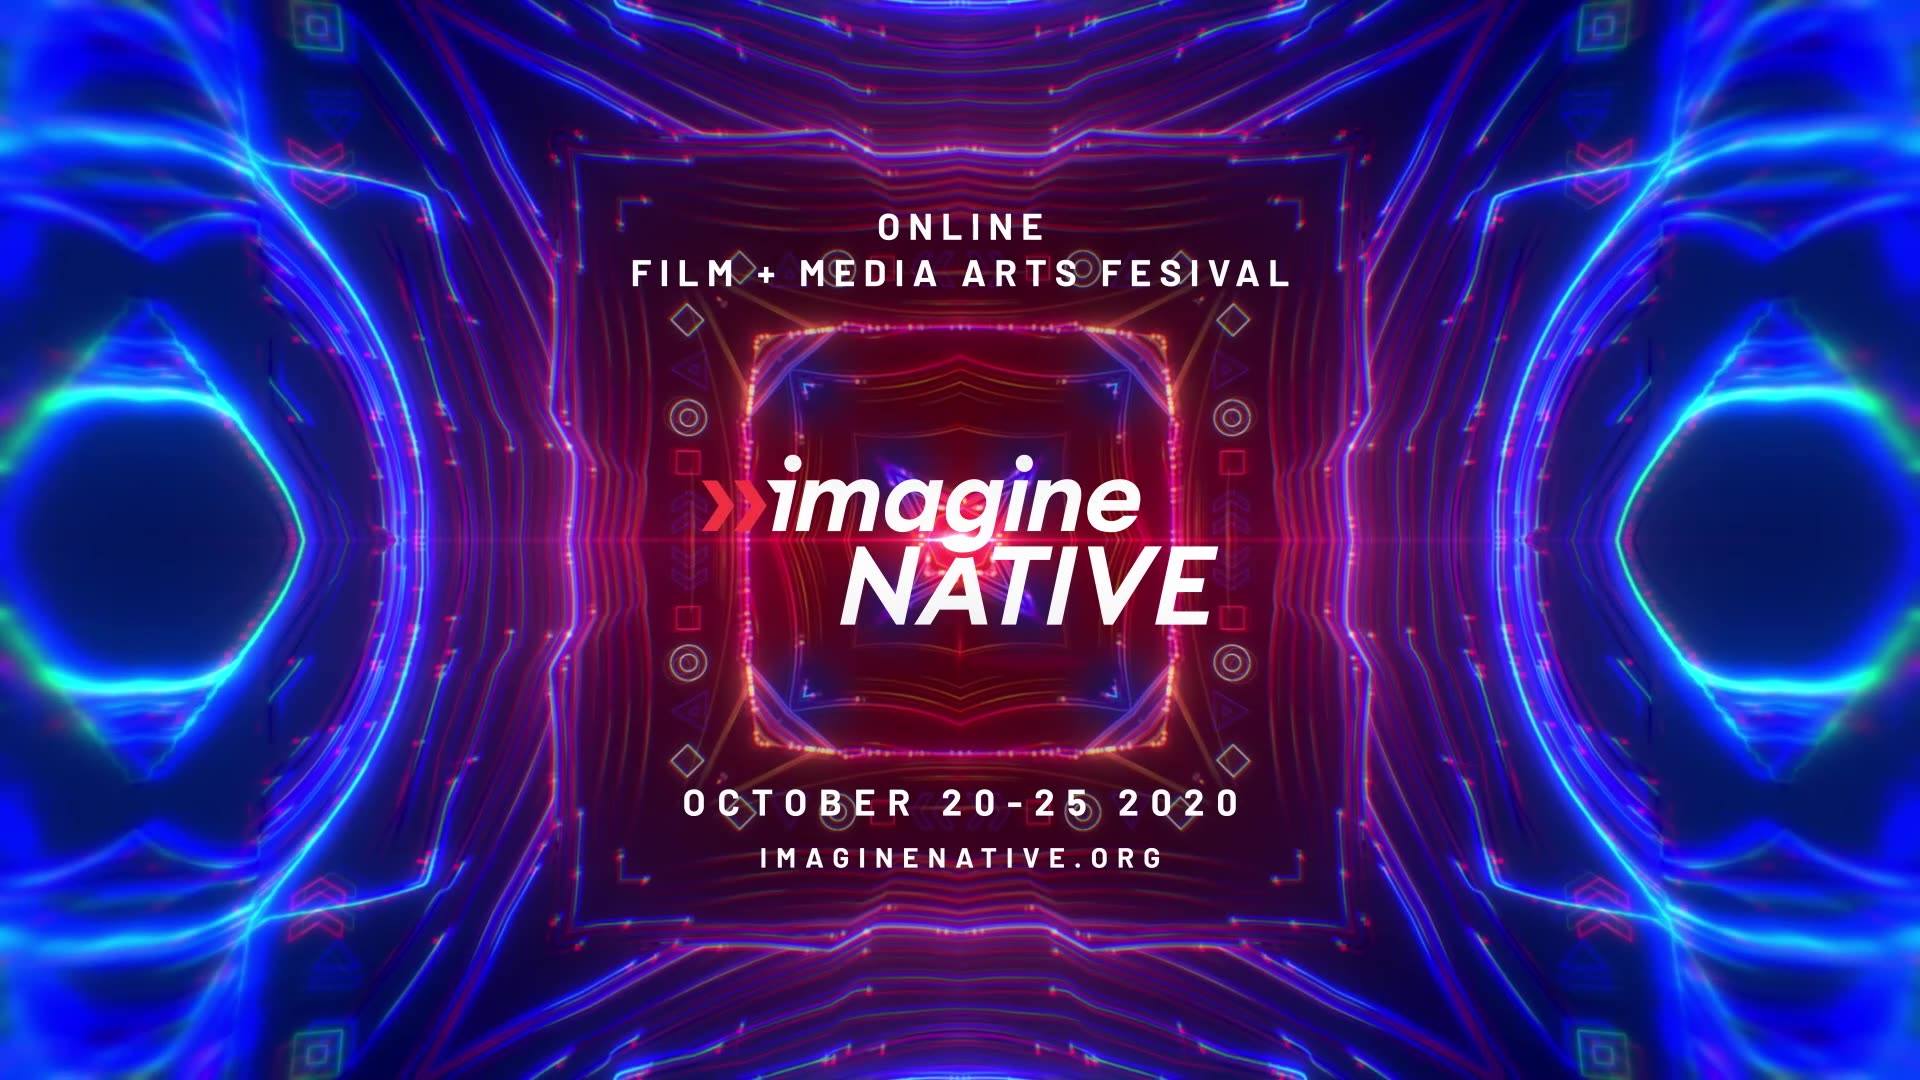 imagineNATIVE Film + Media Arts Festival